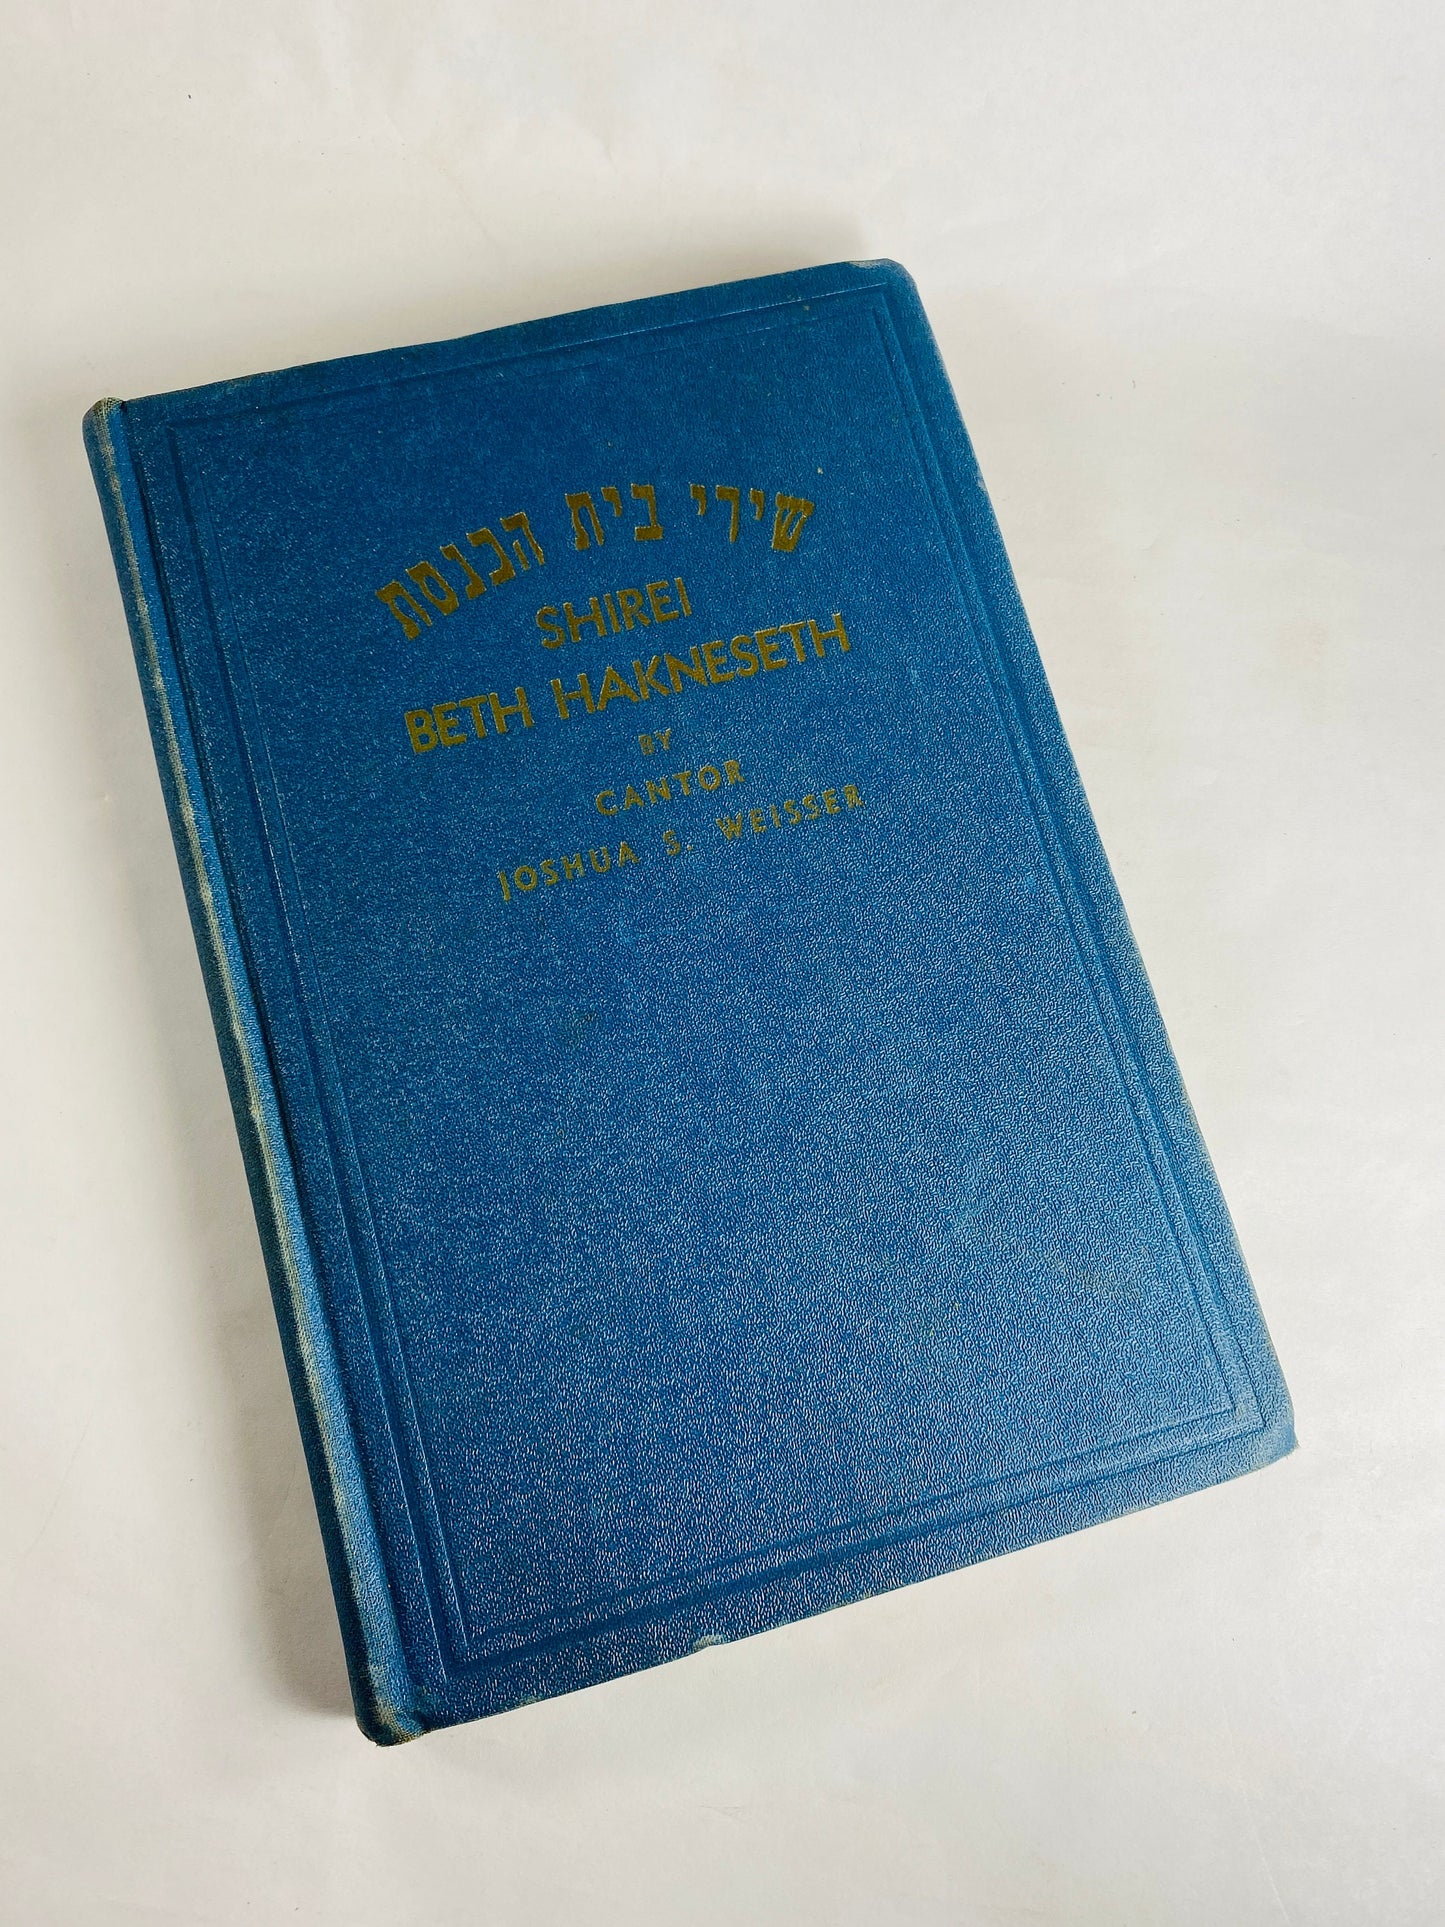 1951 Shirei Beth Hakneseth vintage book of Hebrew Prayers by Cantor Joshua Weisser for Jewish choir Sabbath and Sholosh R'golim